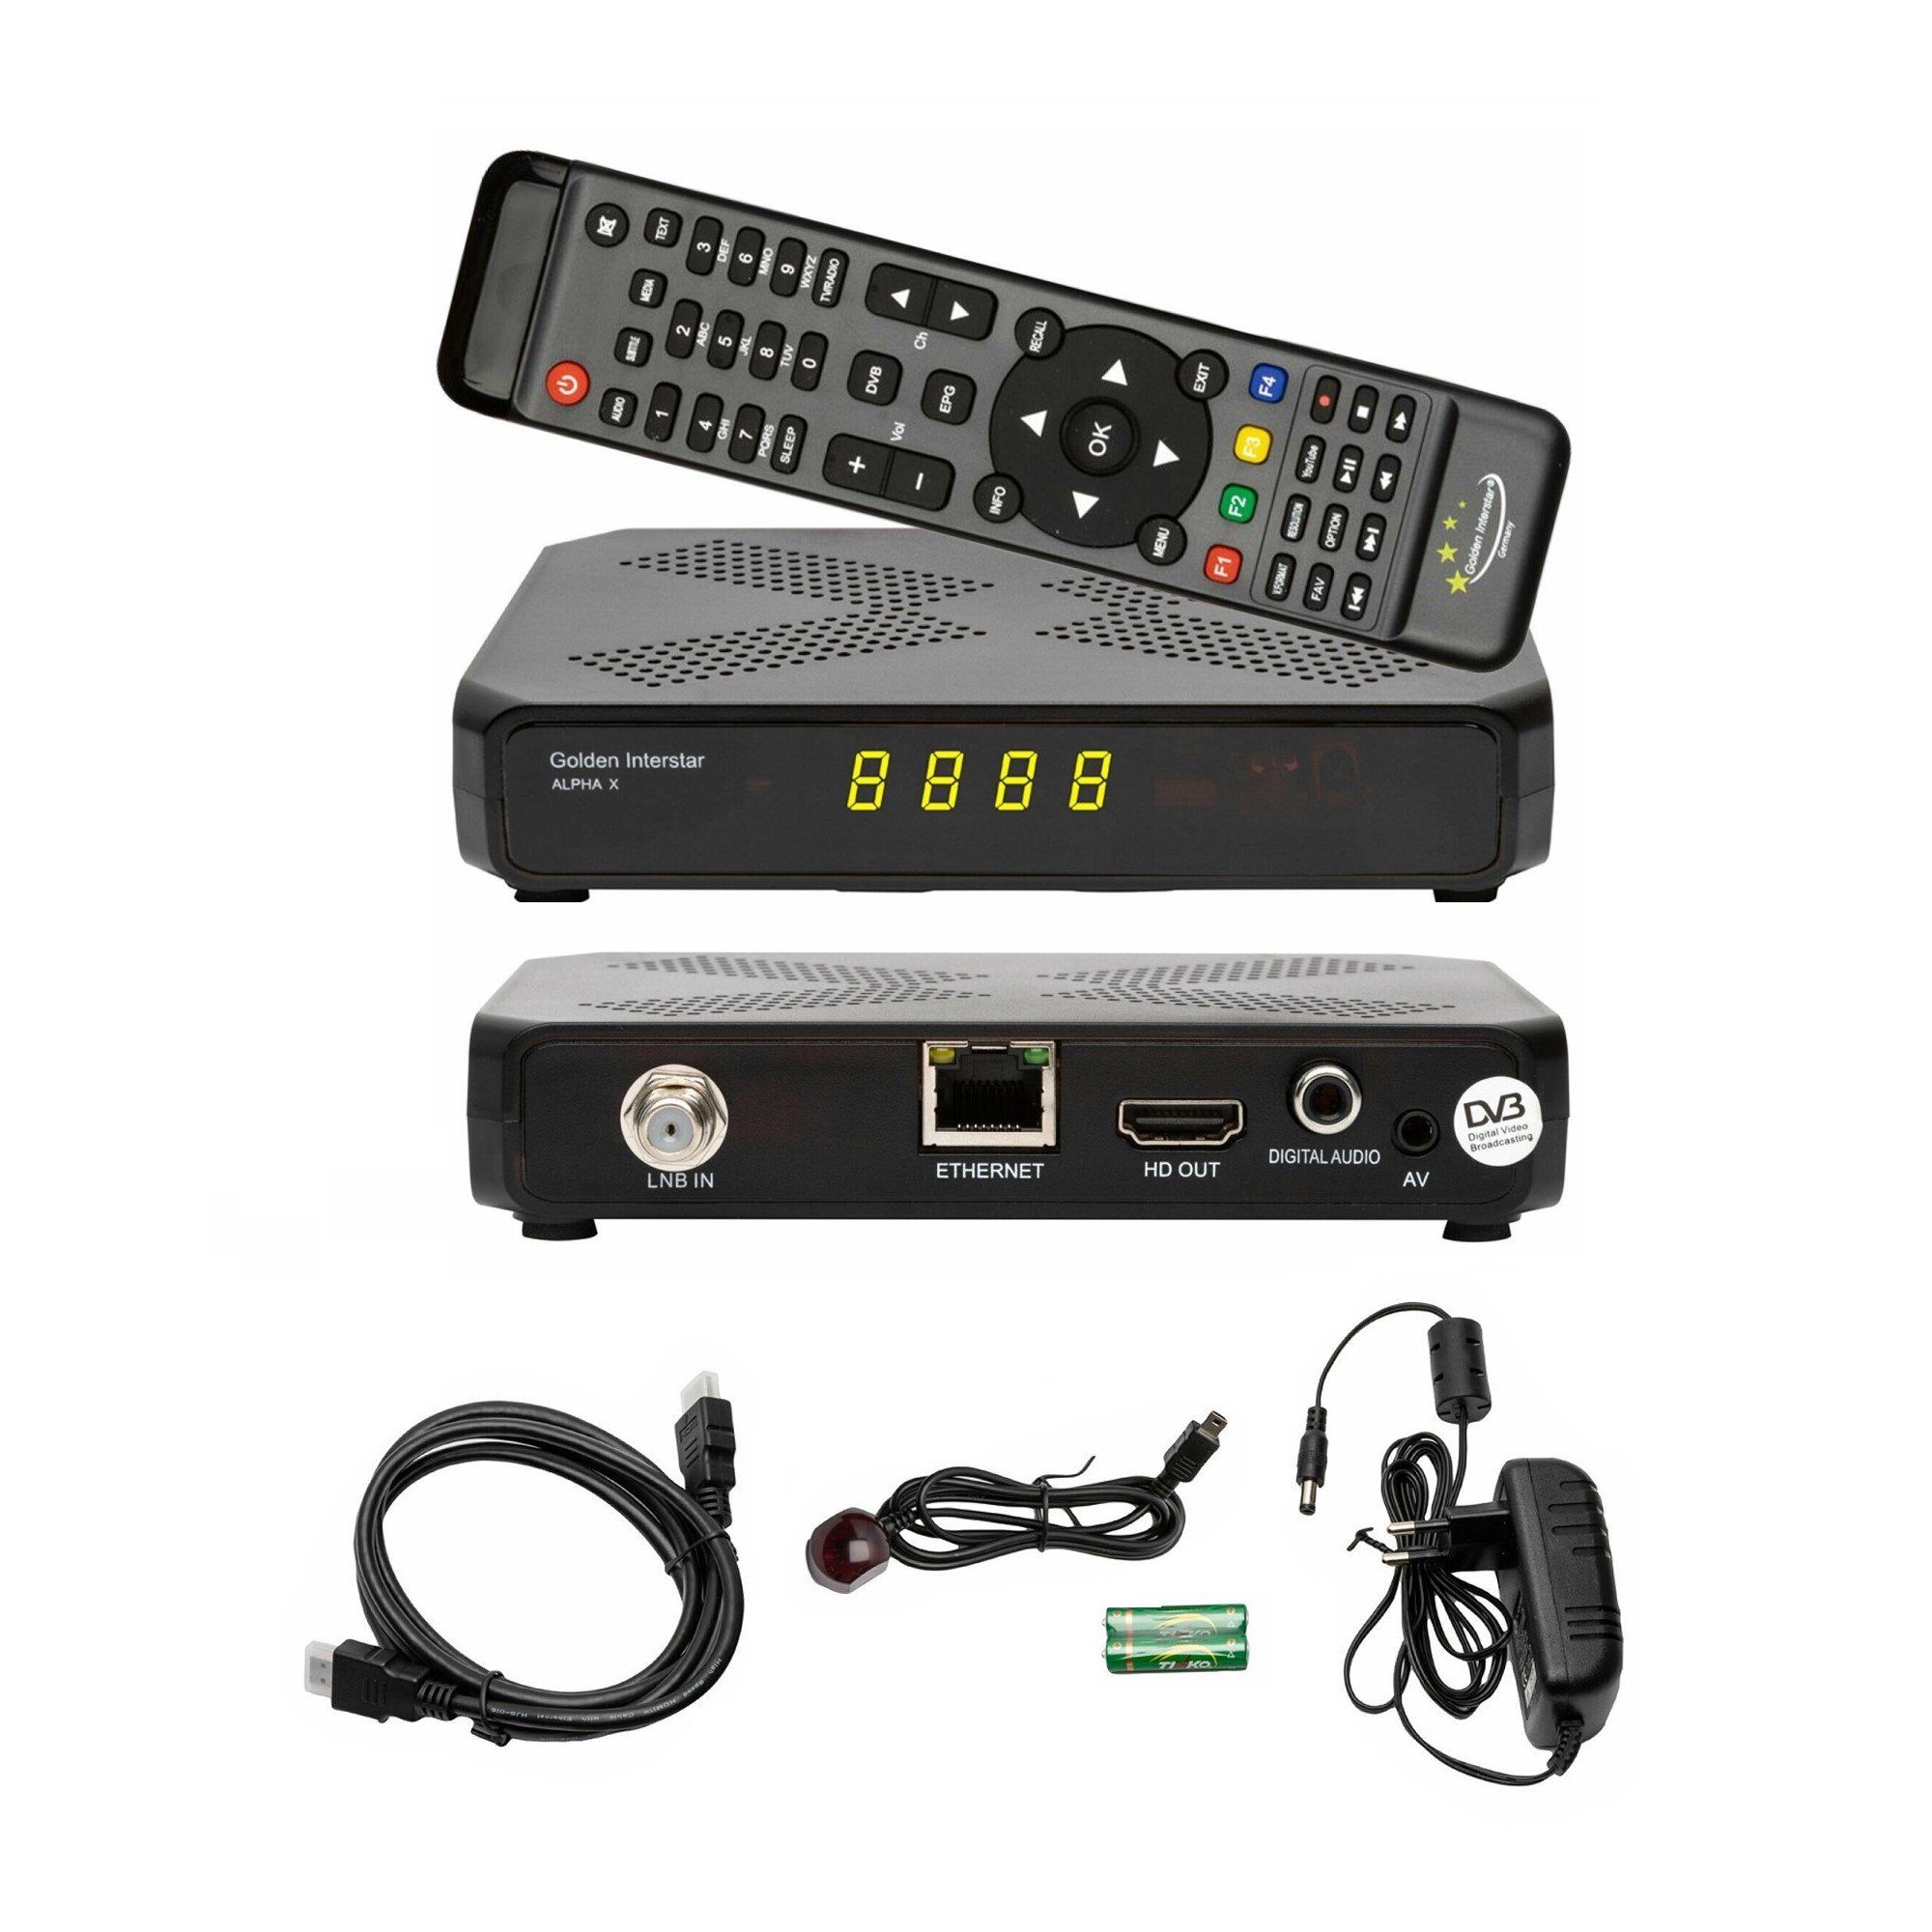 Golden Interstar »Alpha X HD Sat Receiver H.265 IPTV Set-Top Box  Multistream Linux OS« SAT-Receiver (Full HD Satellitenreceiver, Linux OS  H.265 / HEVC, DVB-S2 Multistream-Tuner Unicable, FastScan, Blindscan  Funktion, IPTV fähig (als